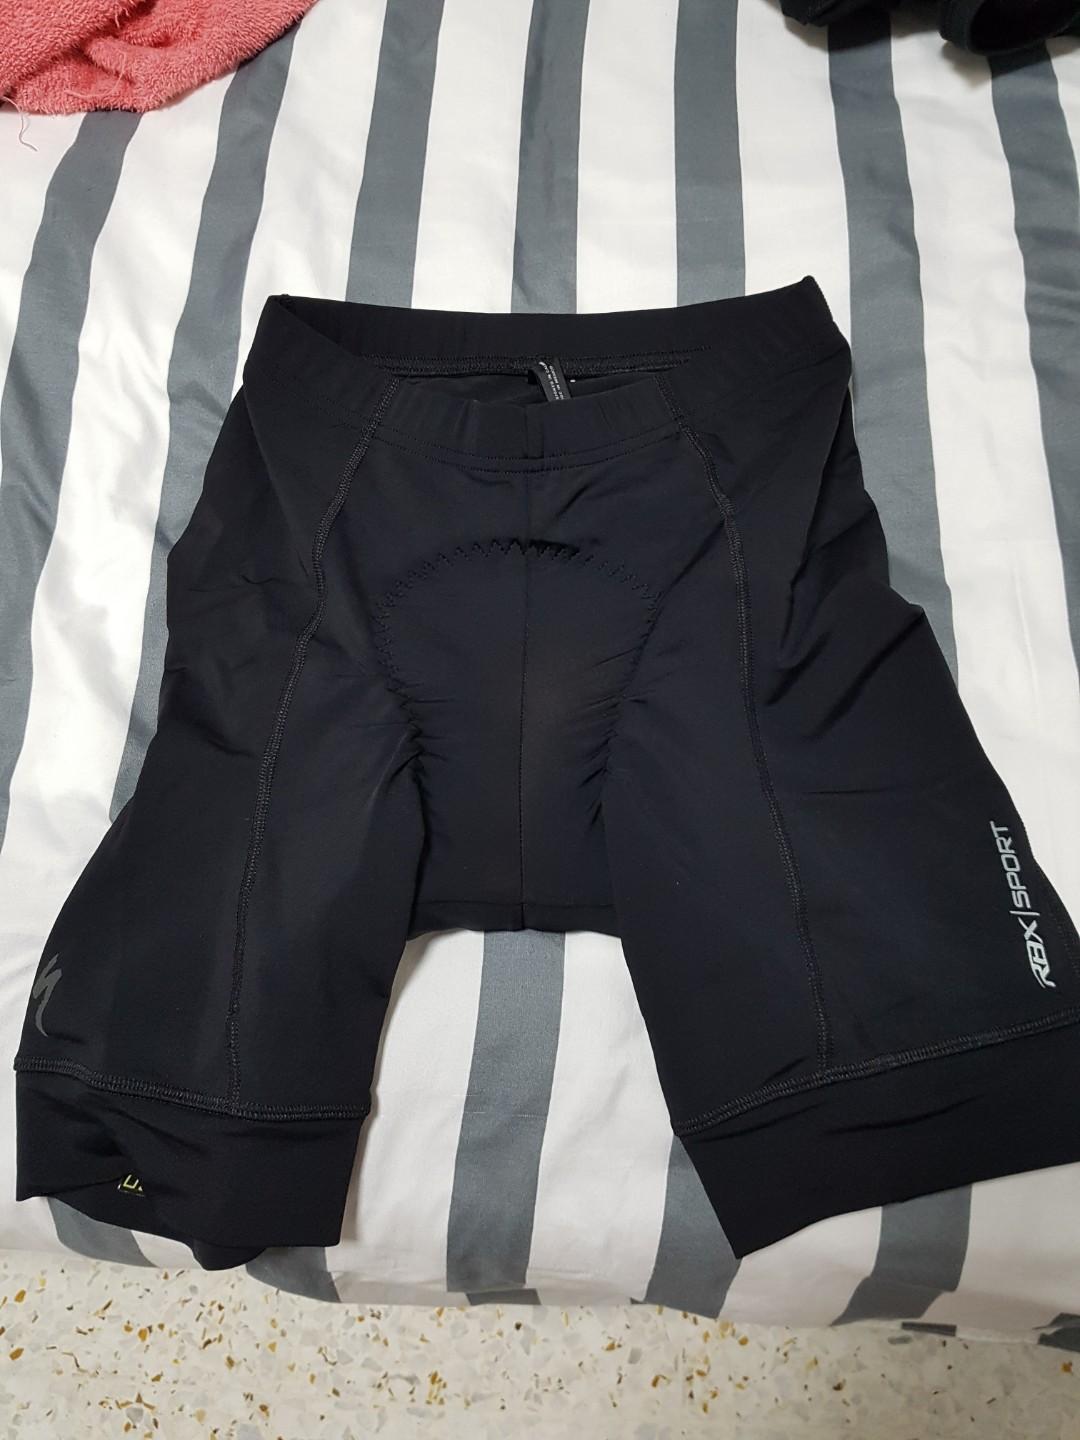 specialized rbx sport shorts